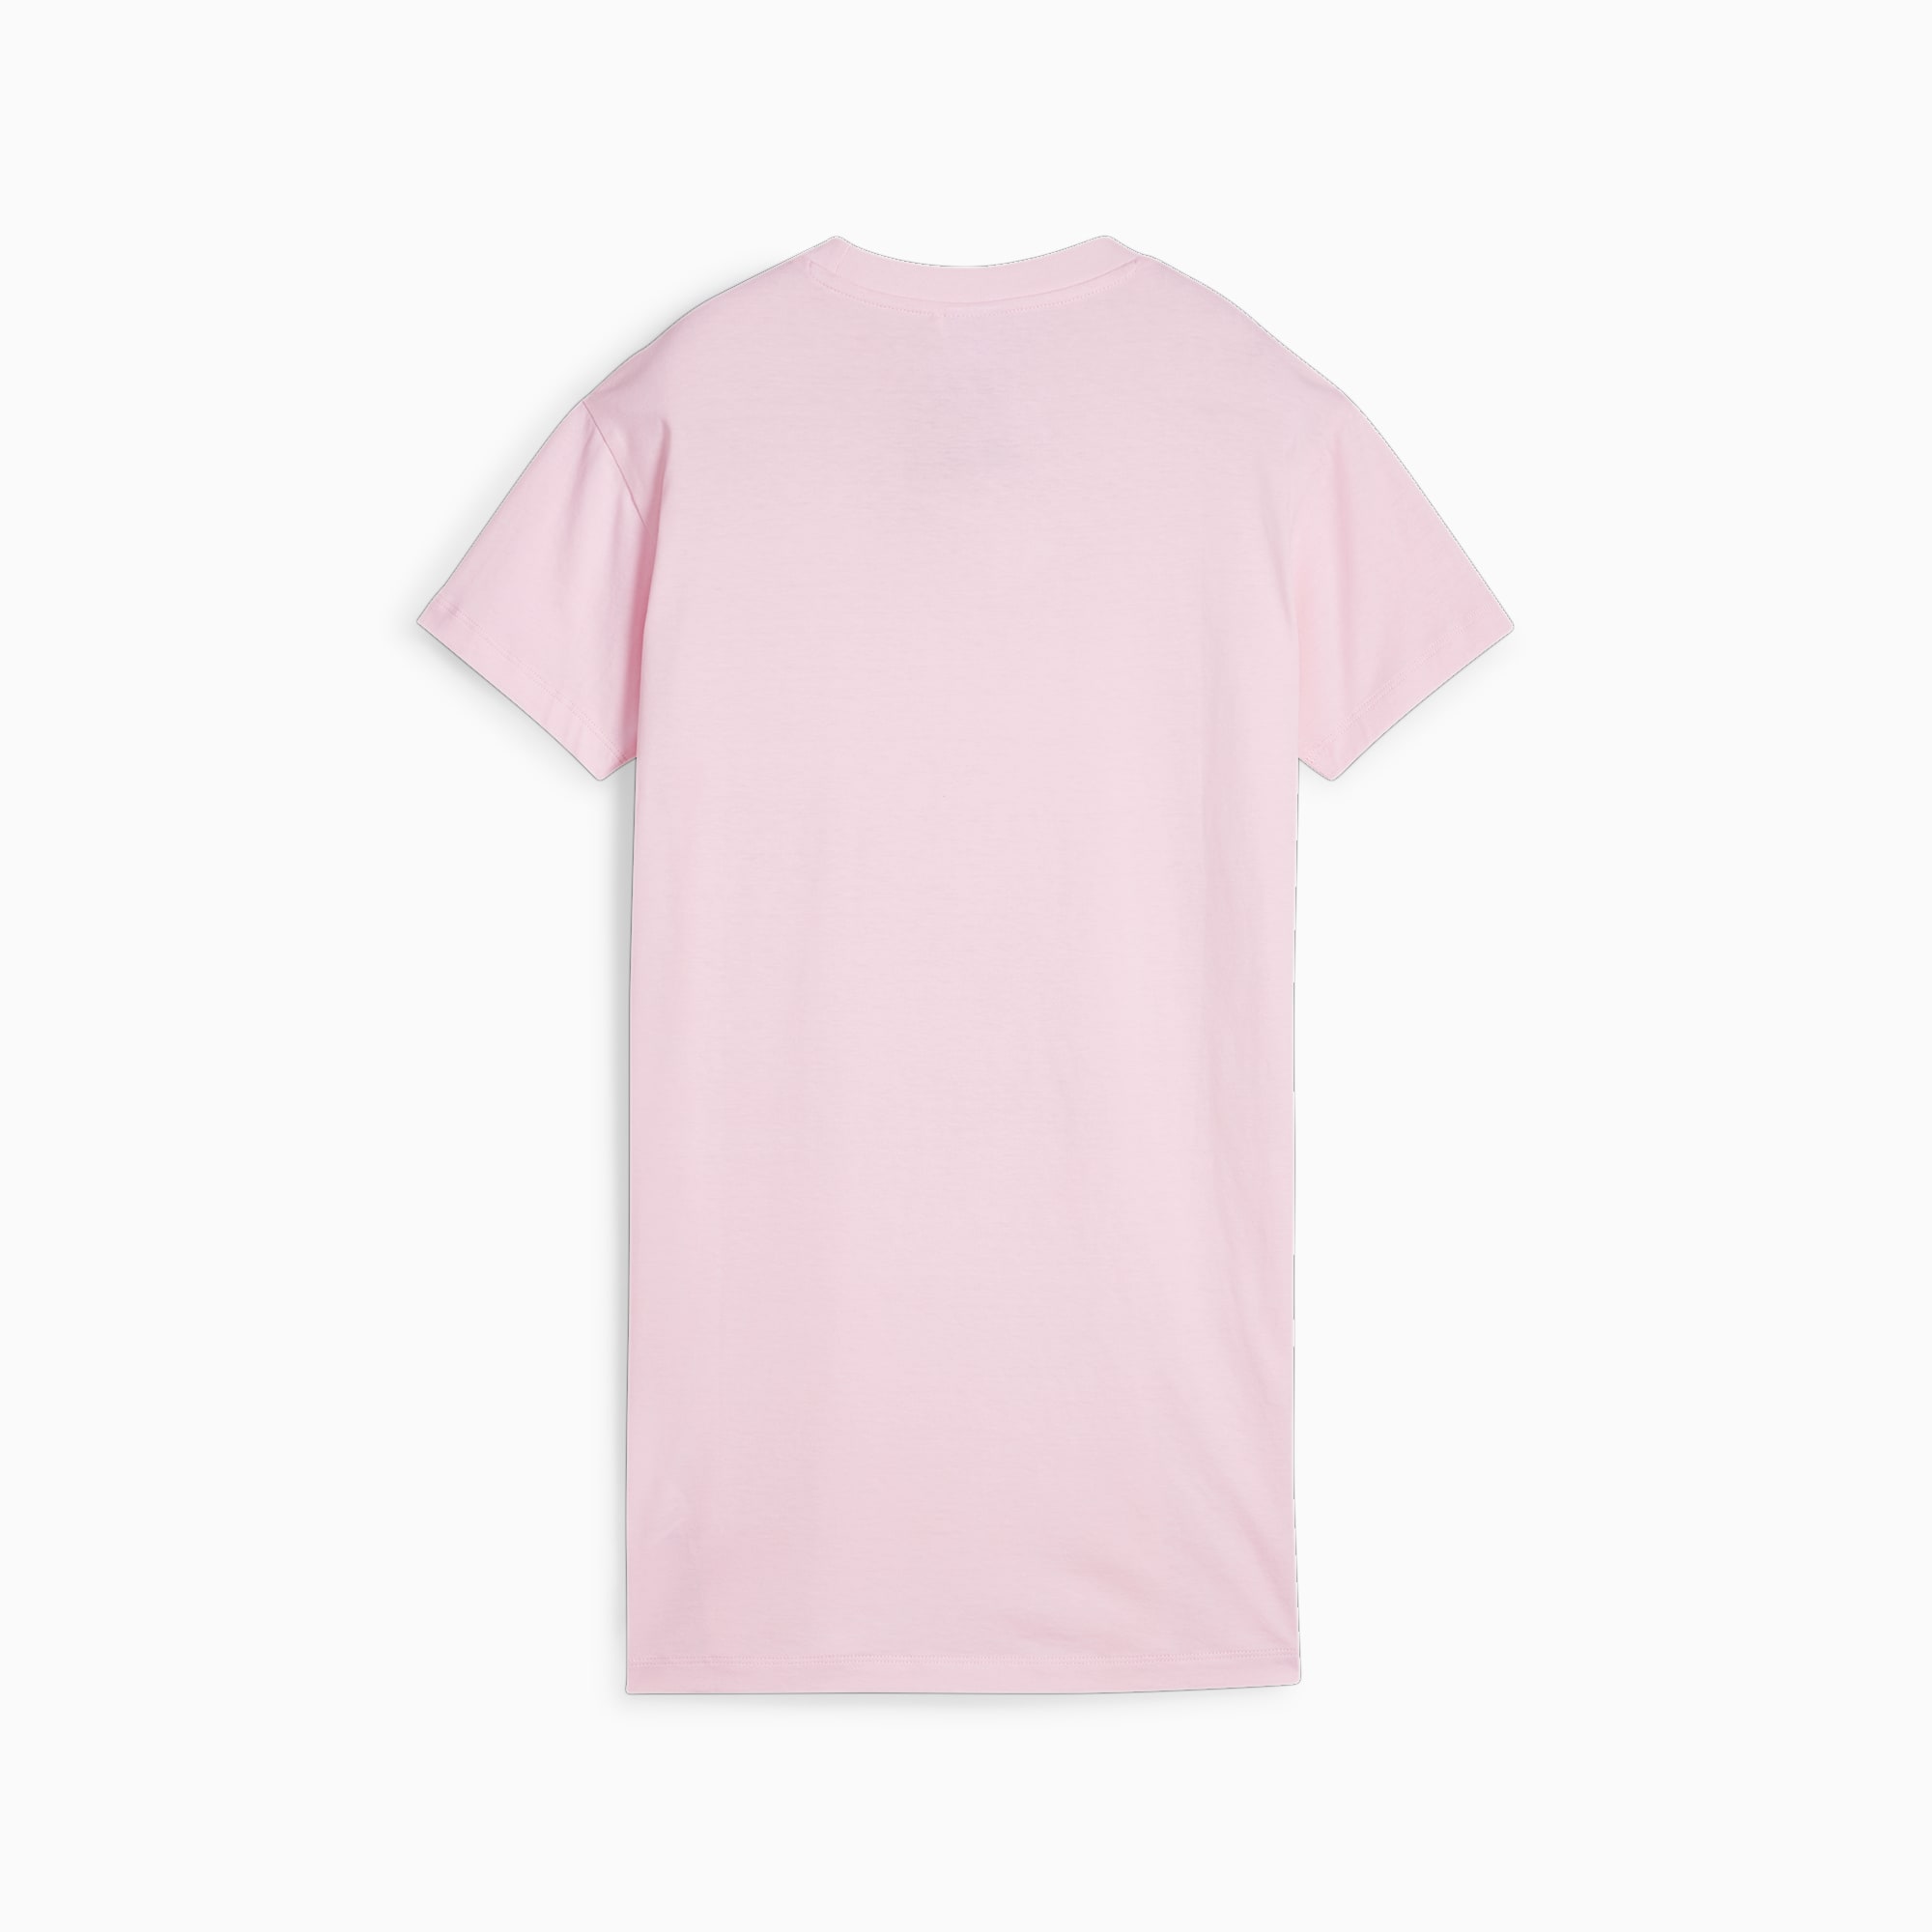 PUMA Better Classics Girl's T-Shirt Dress, Whisp Of Pink, Size 176, Clothing